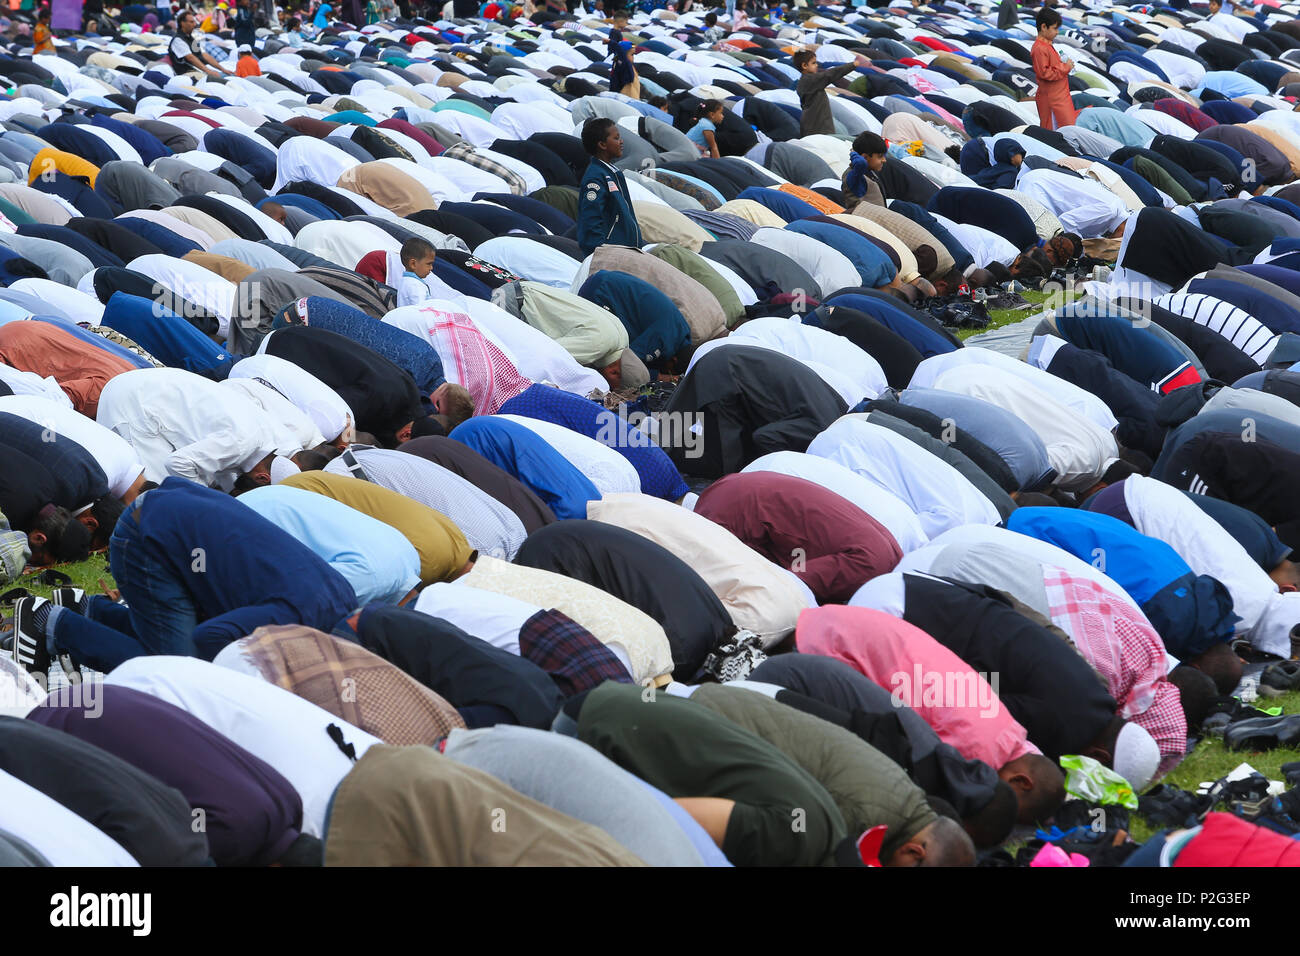 Moslem or Muslim men praying outside in Eid, Birmingham UK Stock Photo